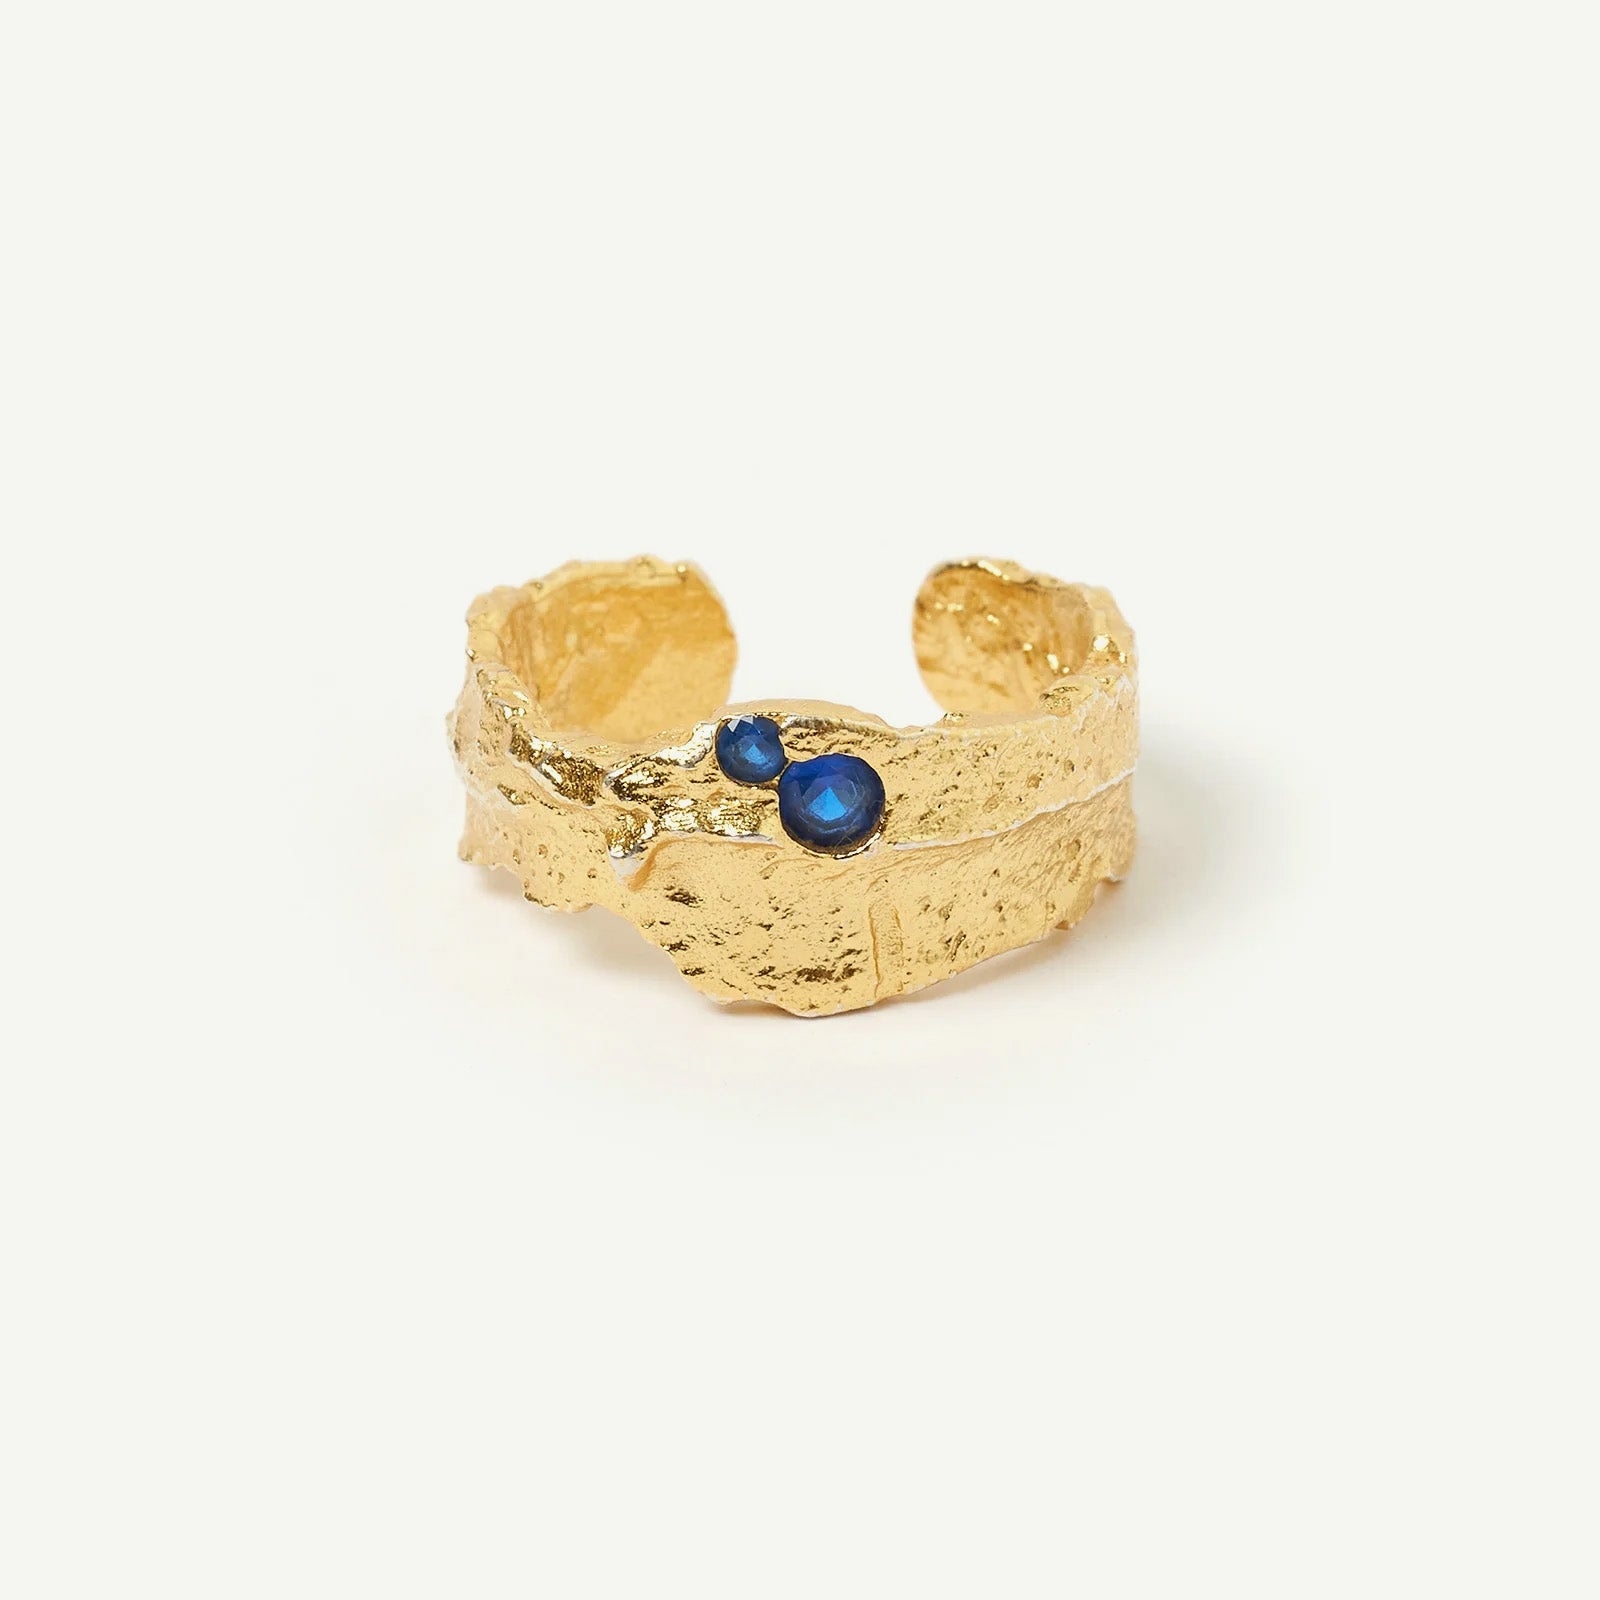 Anya Gold and Blue Ring